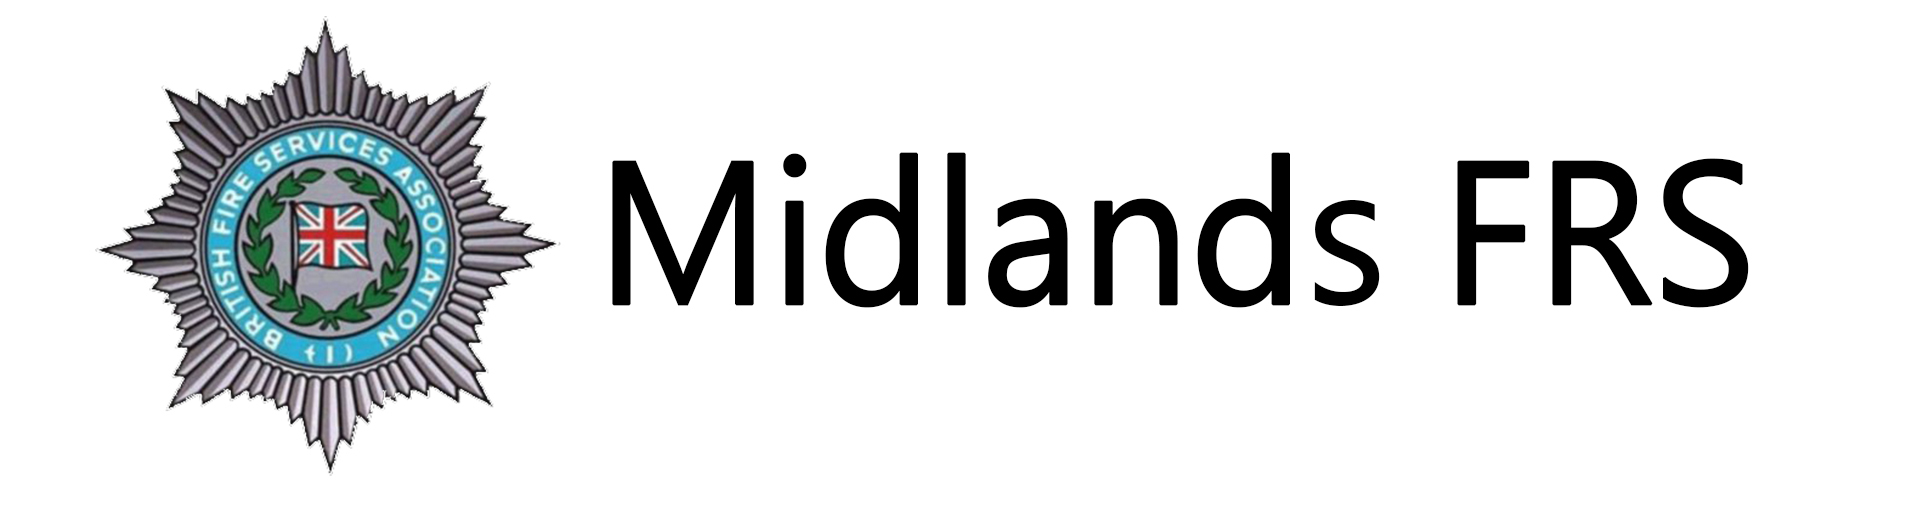 MidlandsFRS